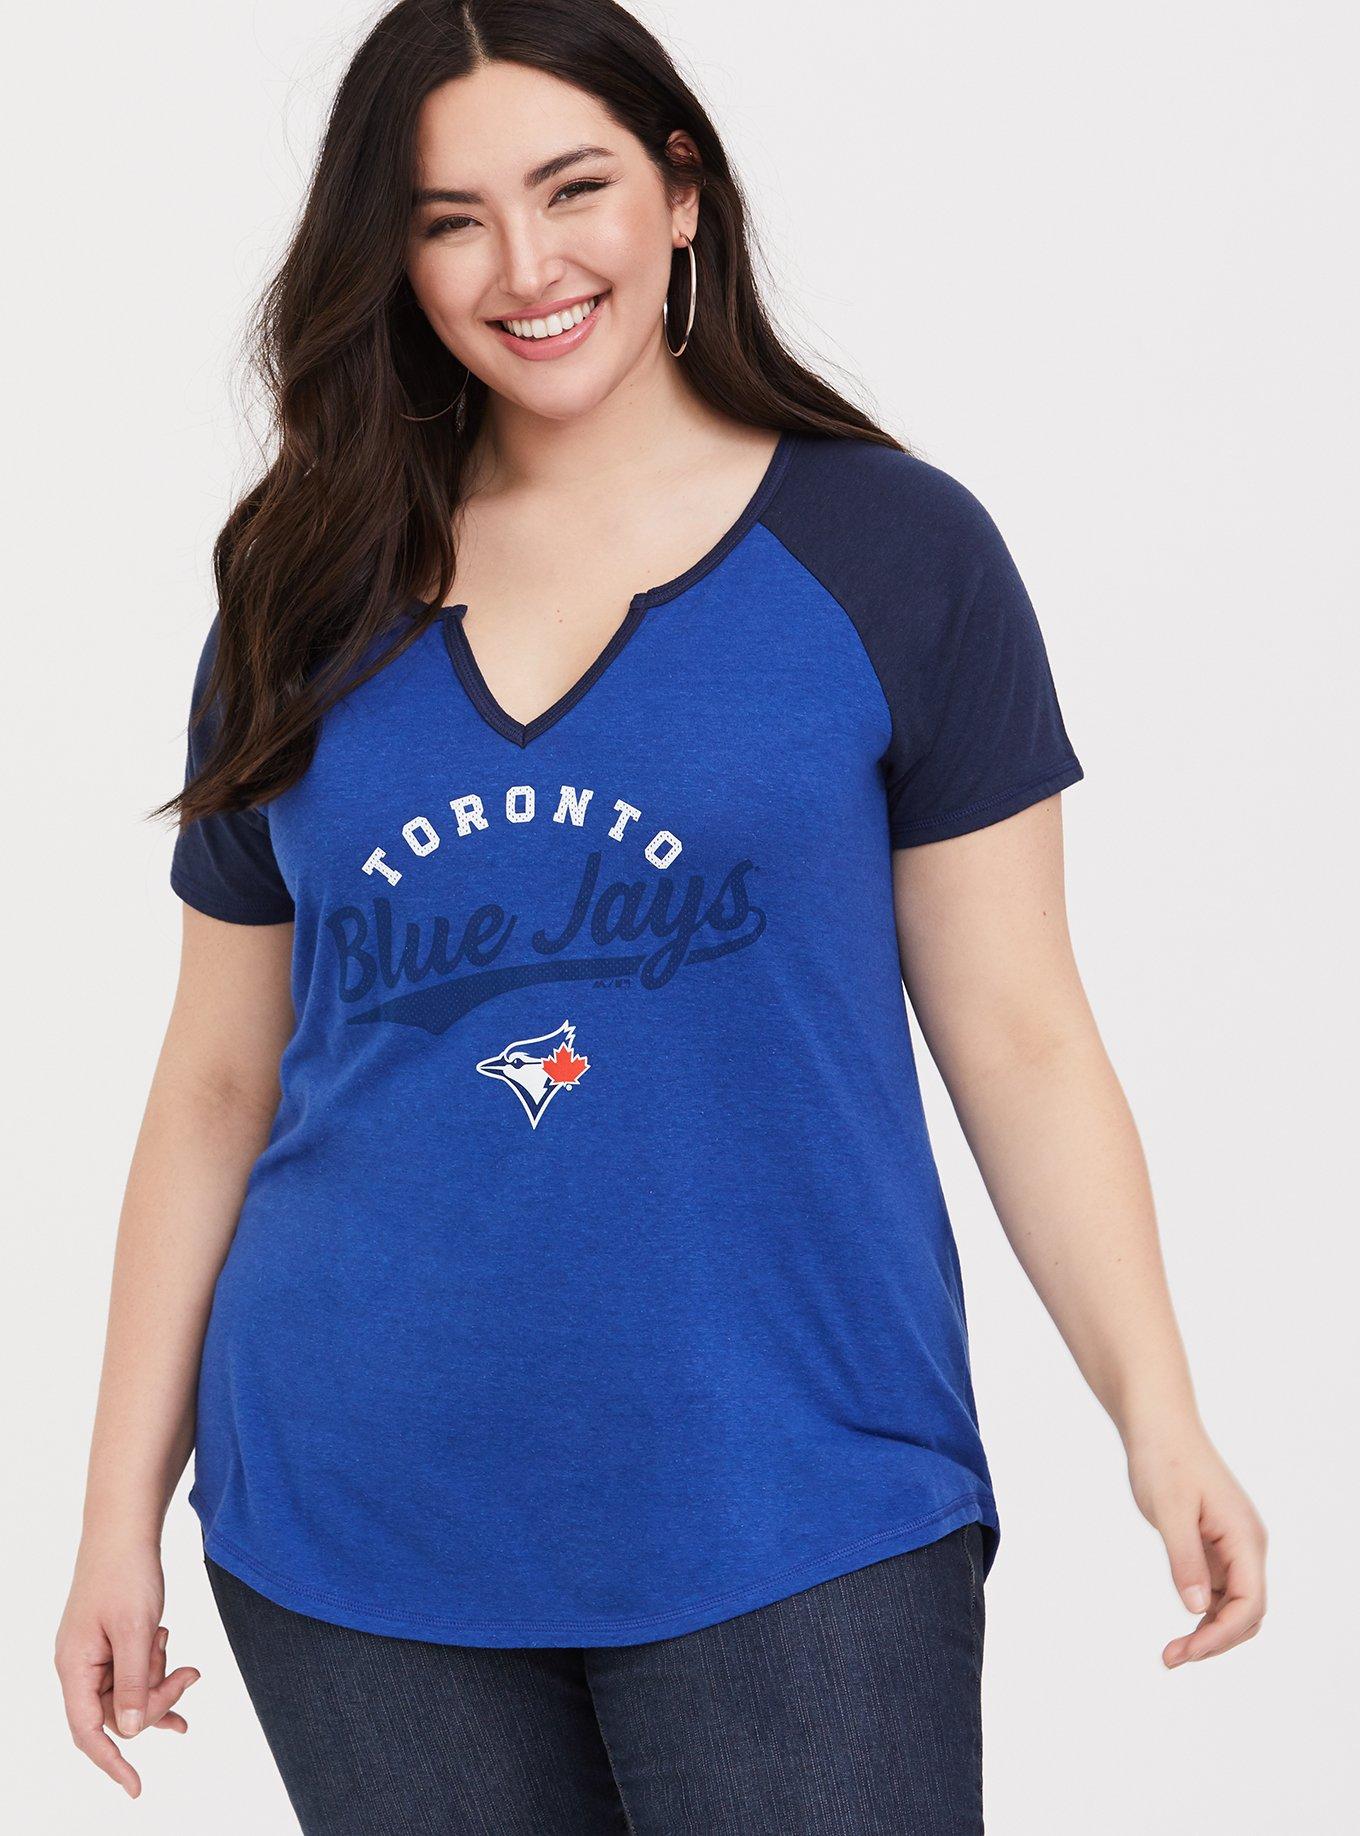 Toronto Blue Jays Triple Scoop Tee Shirt Women's XL / Royal Blue